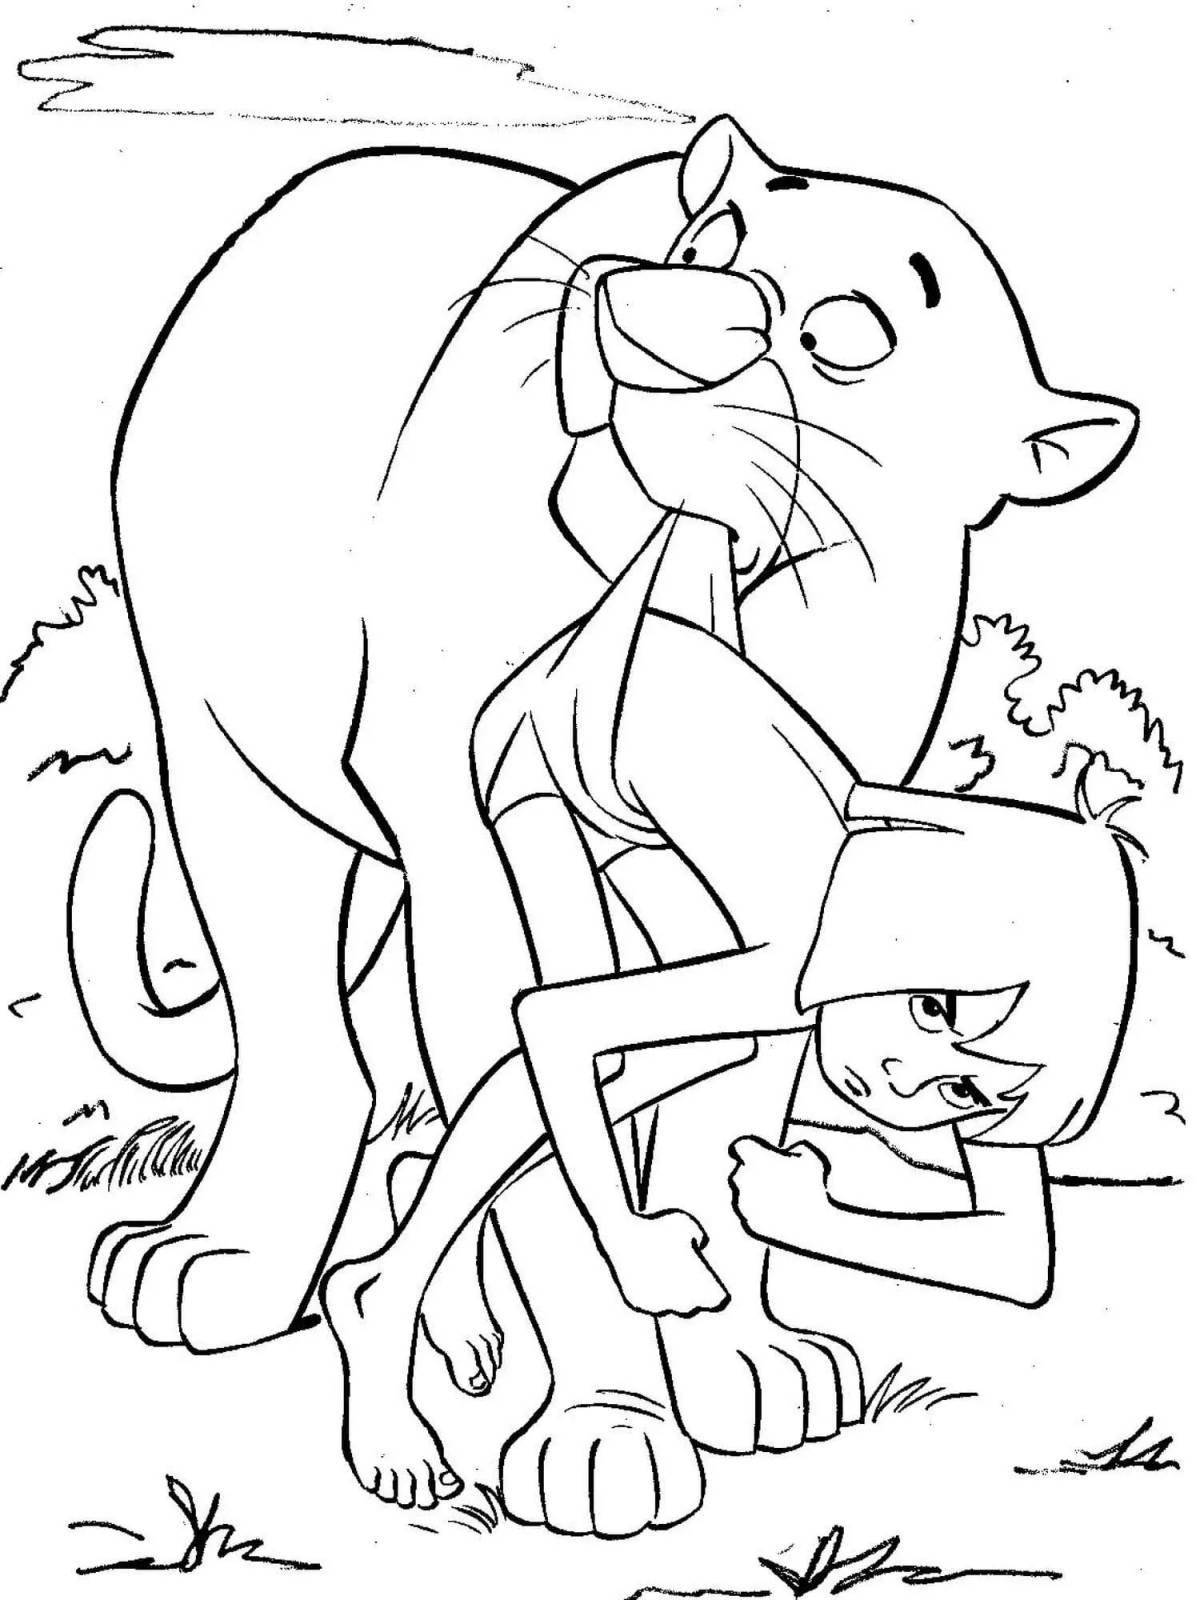 Coloring page charming mowgli and bagheera